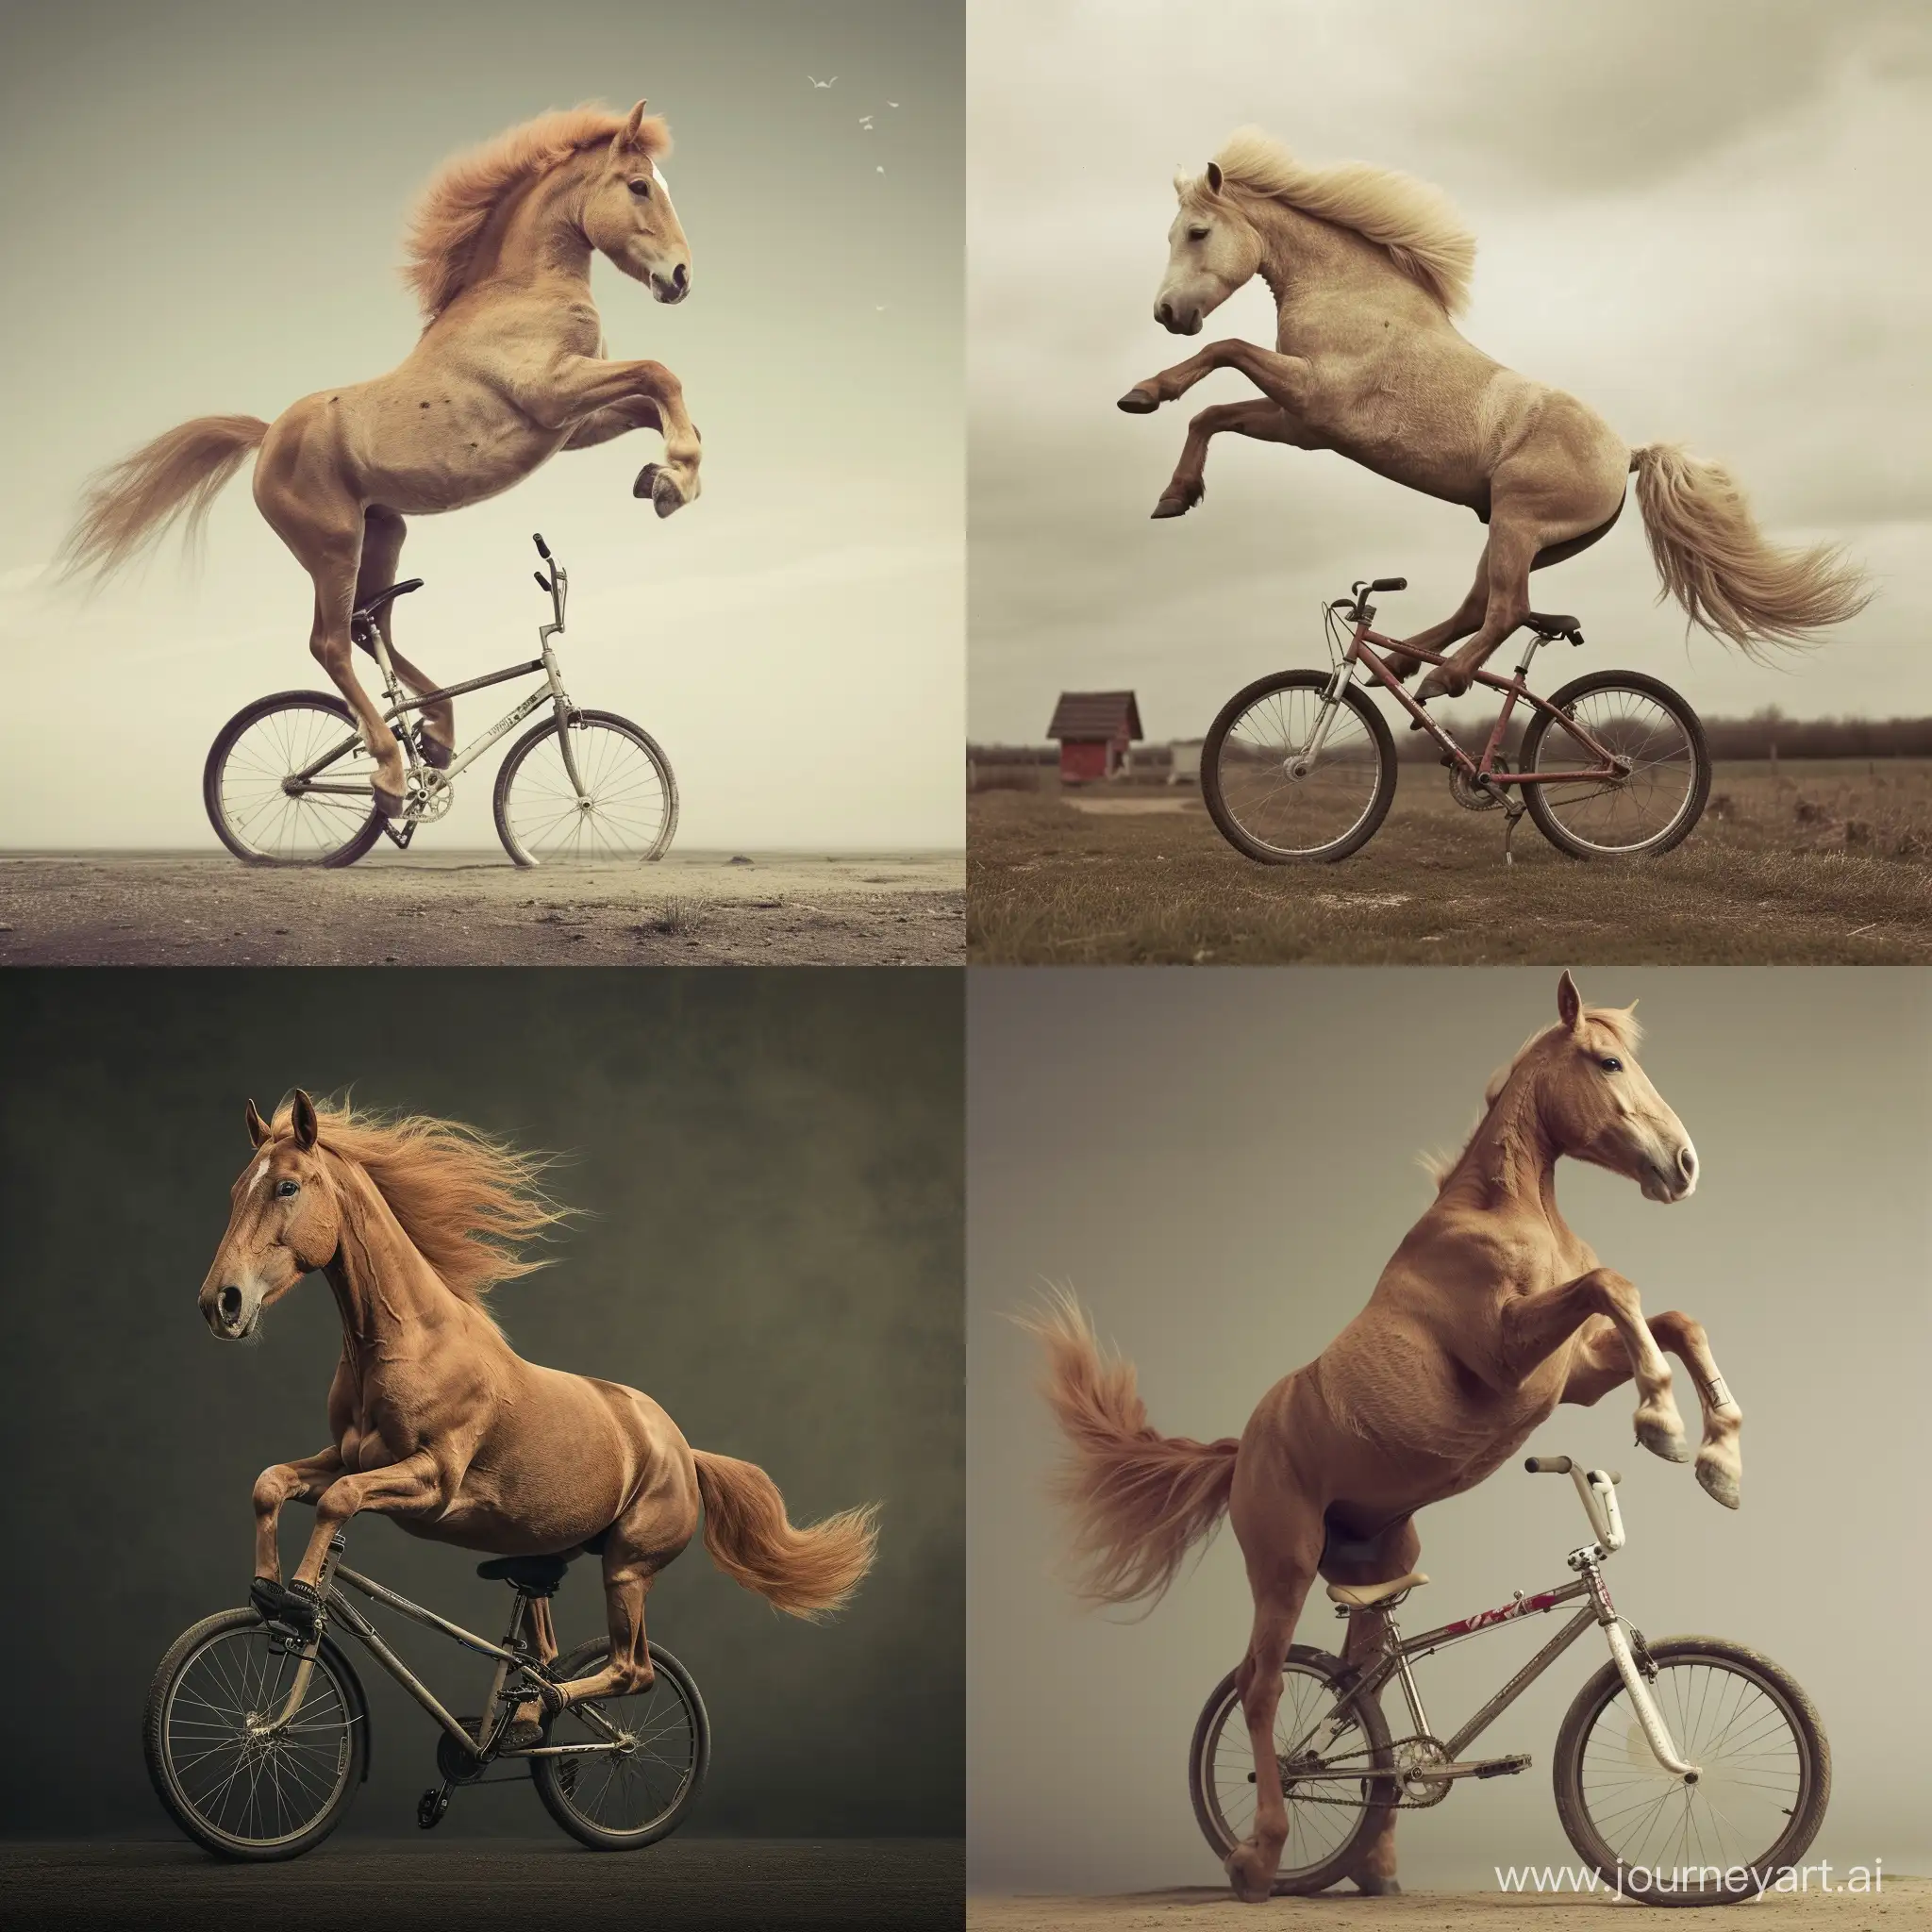 Gymnast-Riding-a-Bicycle-on-Gymnastics-Horse